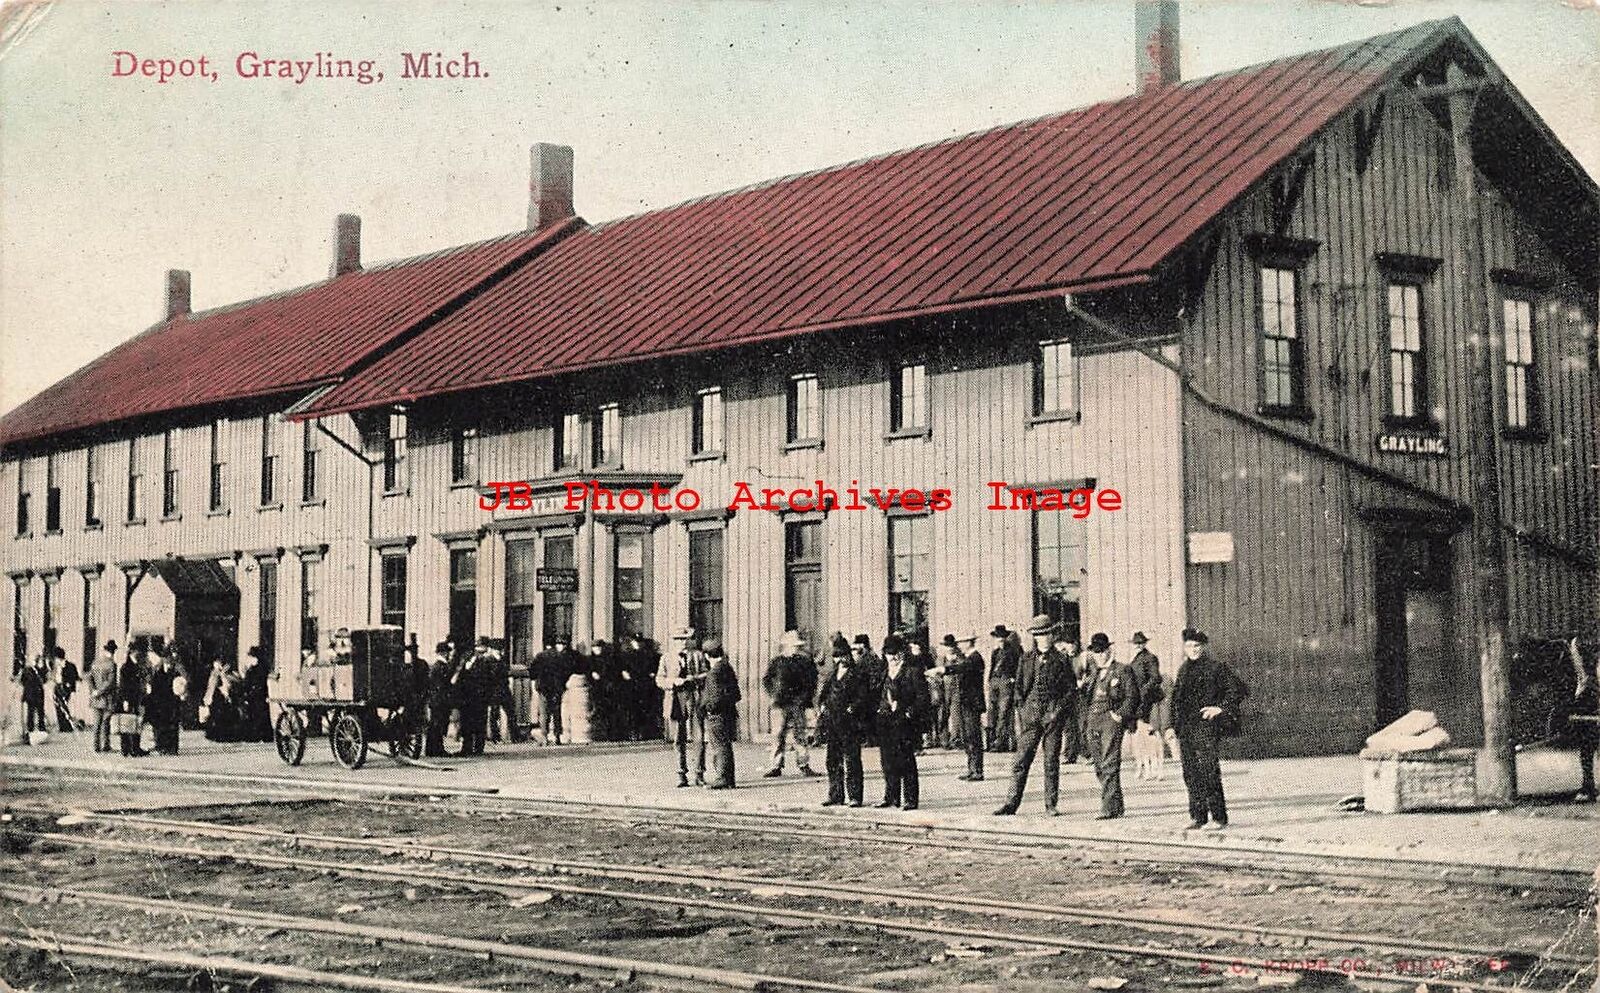 MI, Grayling, Michigan, Railroad Depot, Exterior View, 1911 PM